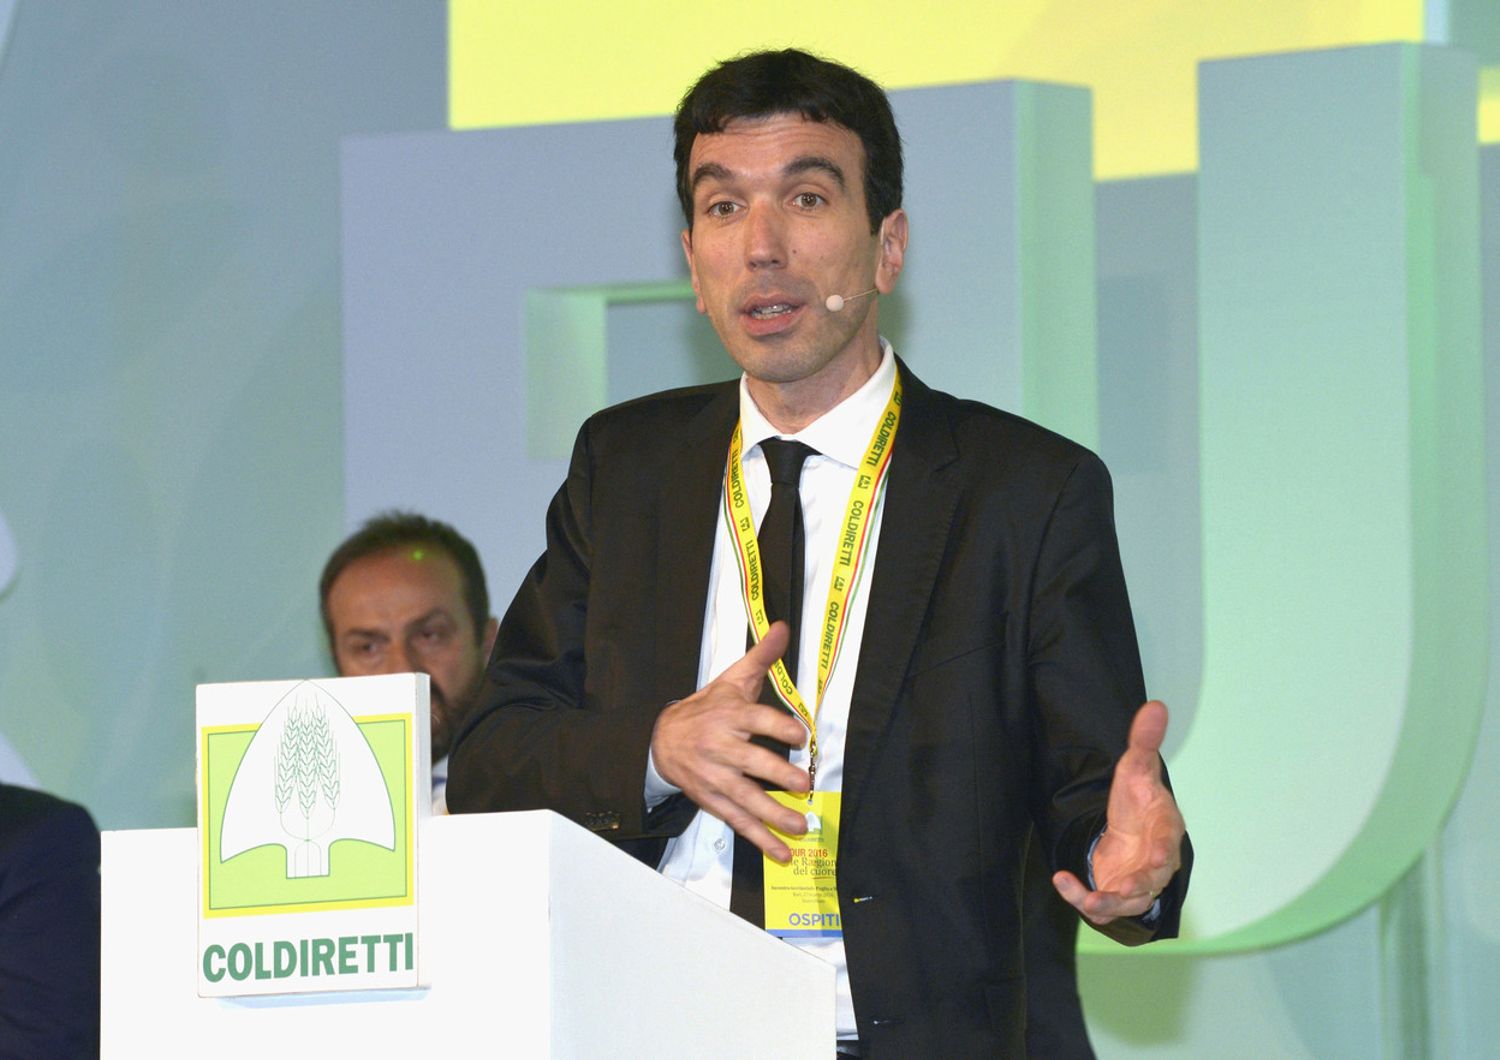 Maurizio Martina, ministro Agricoltura (agf)&nbsp;